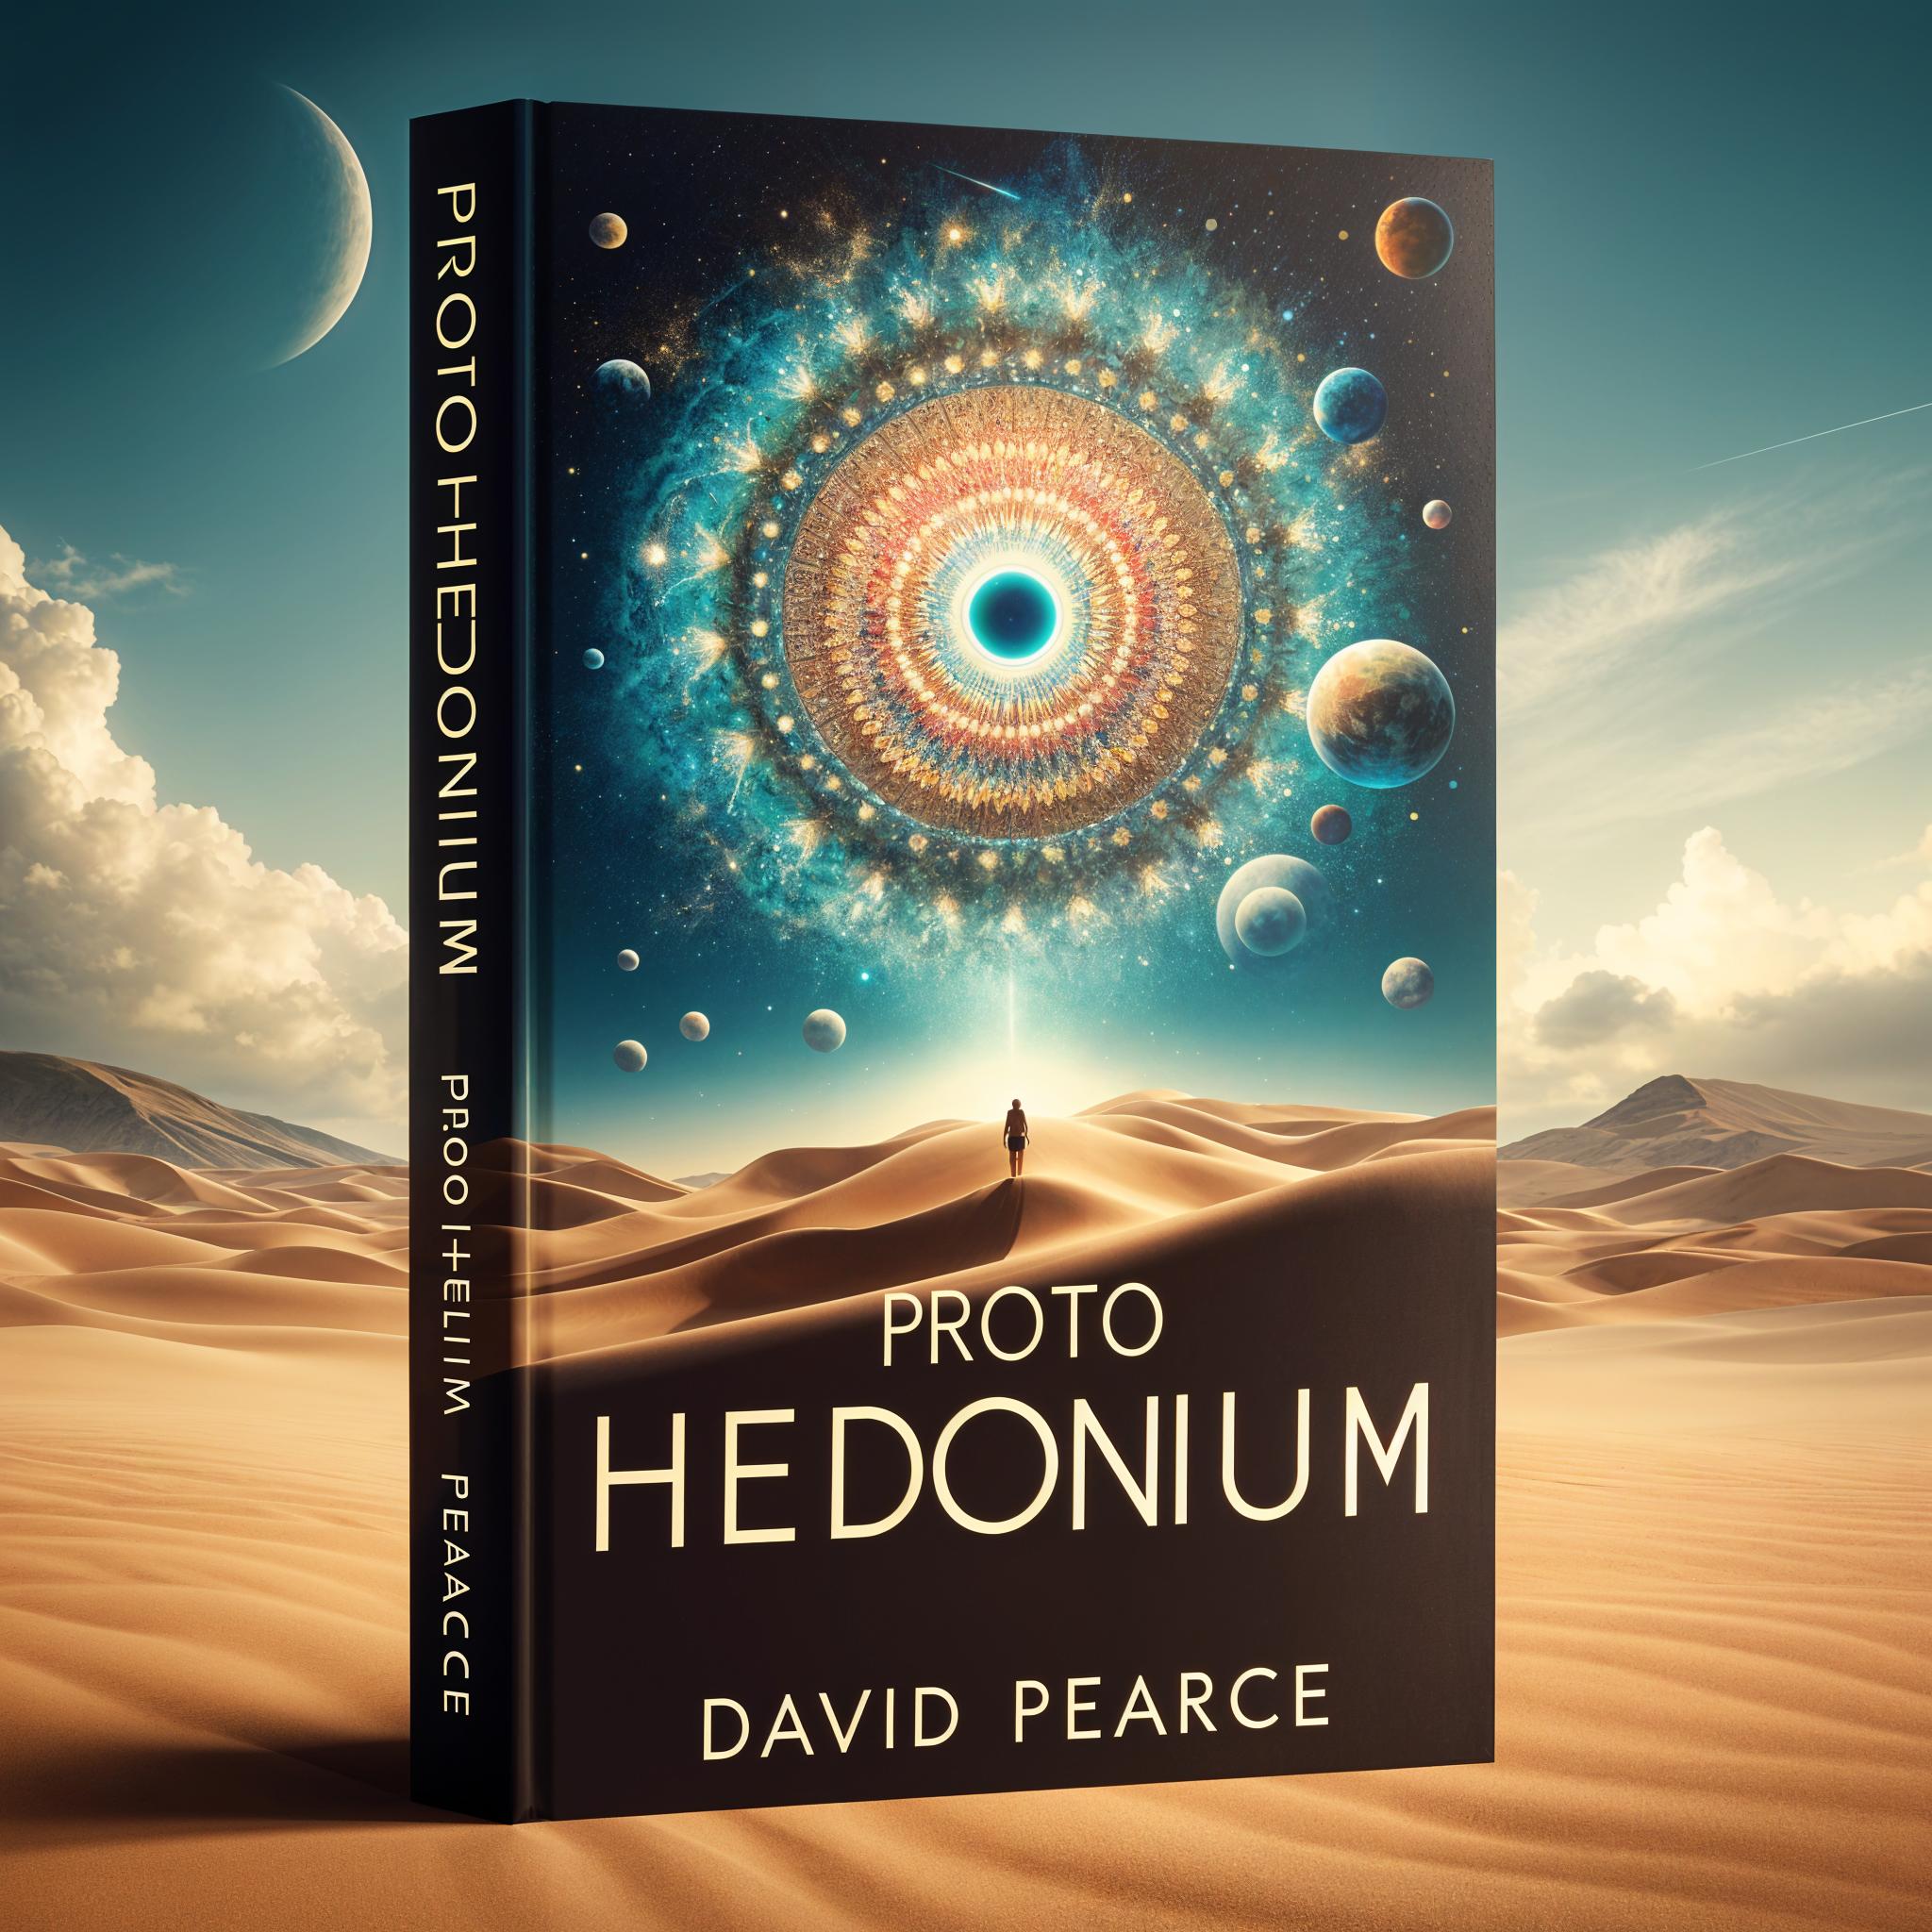 Proto-Hedonium by David Pearce